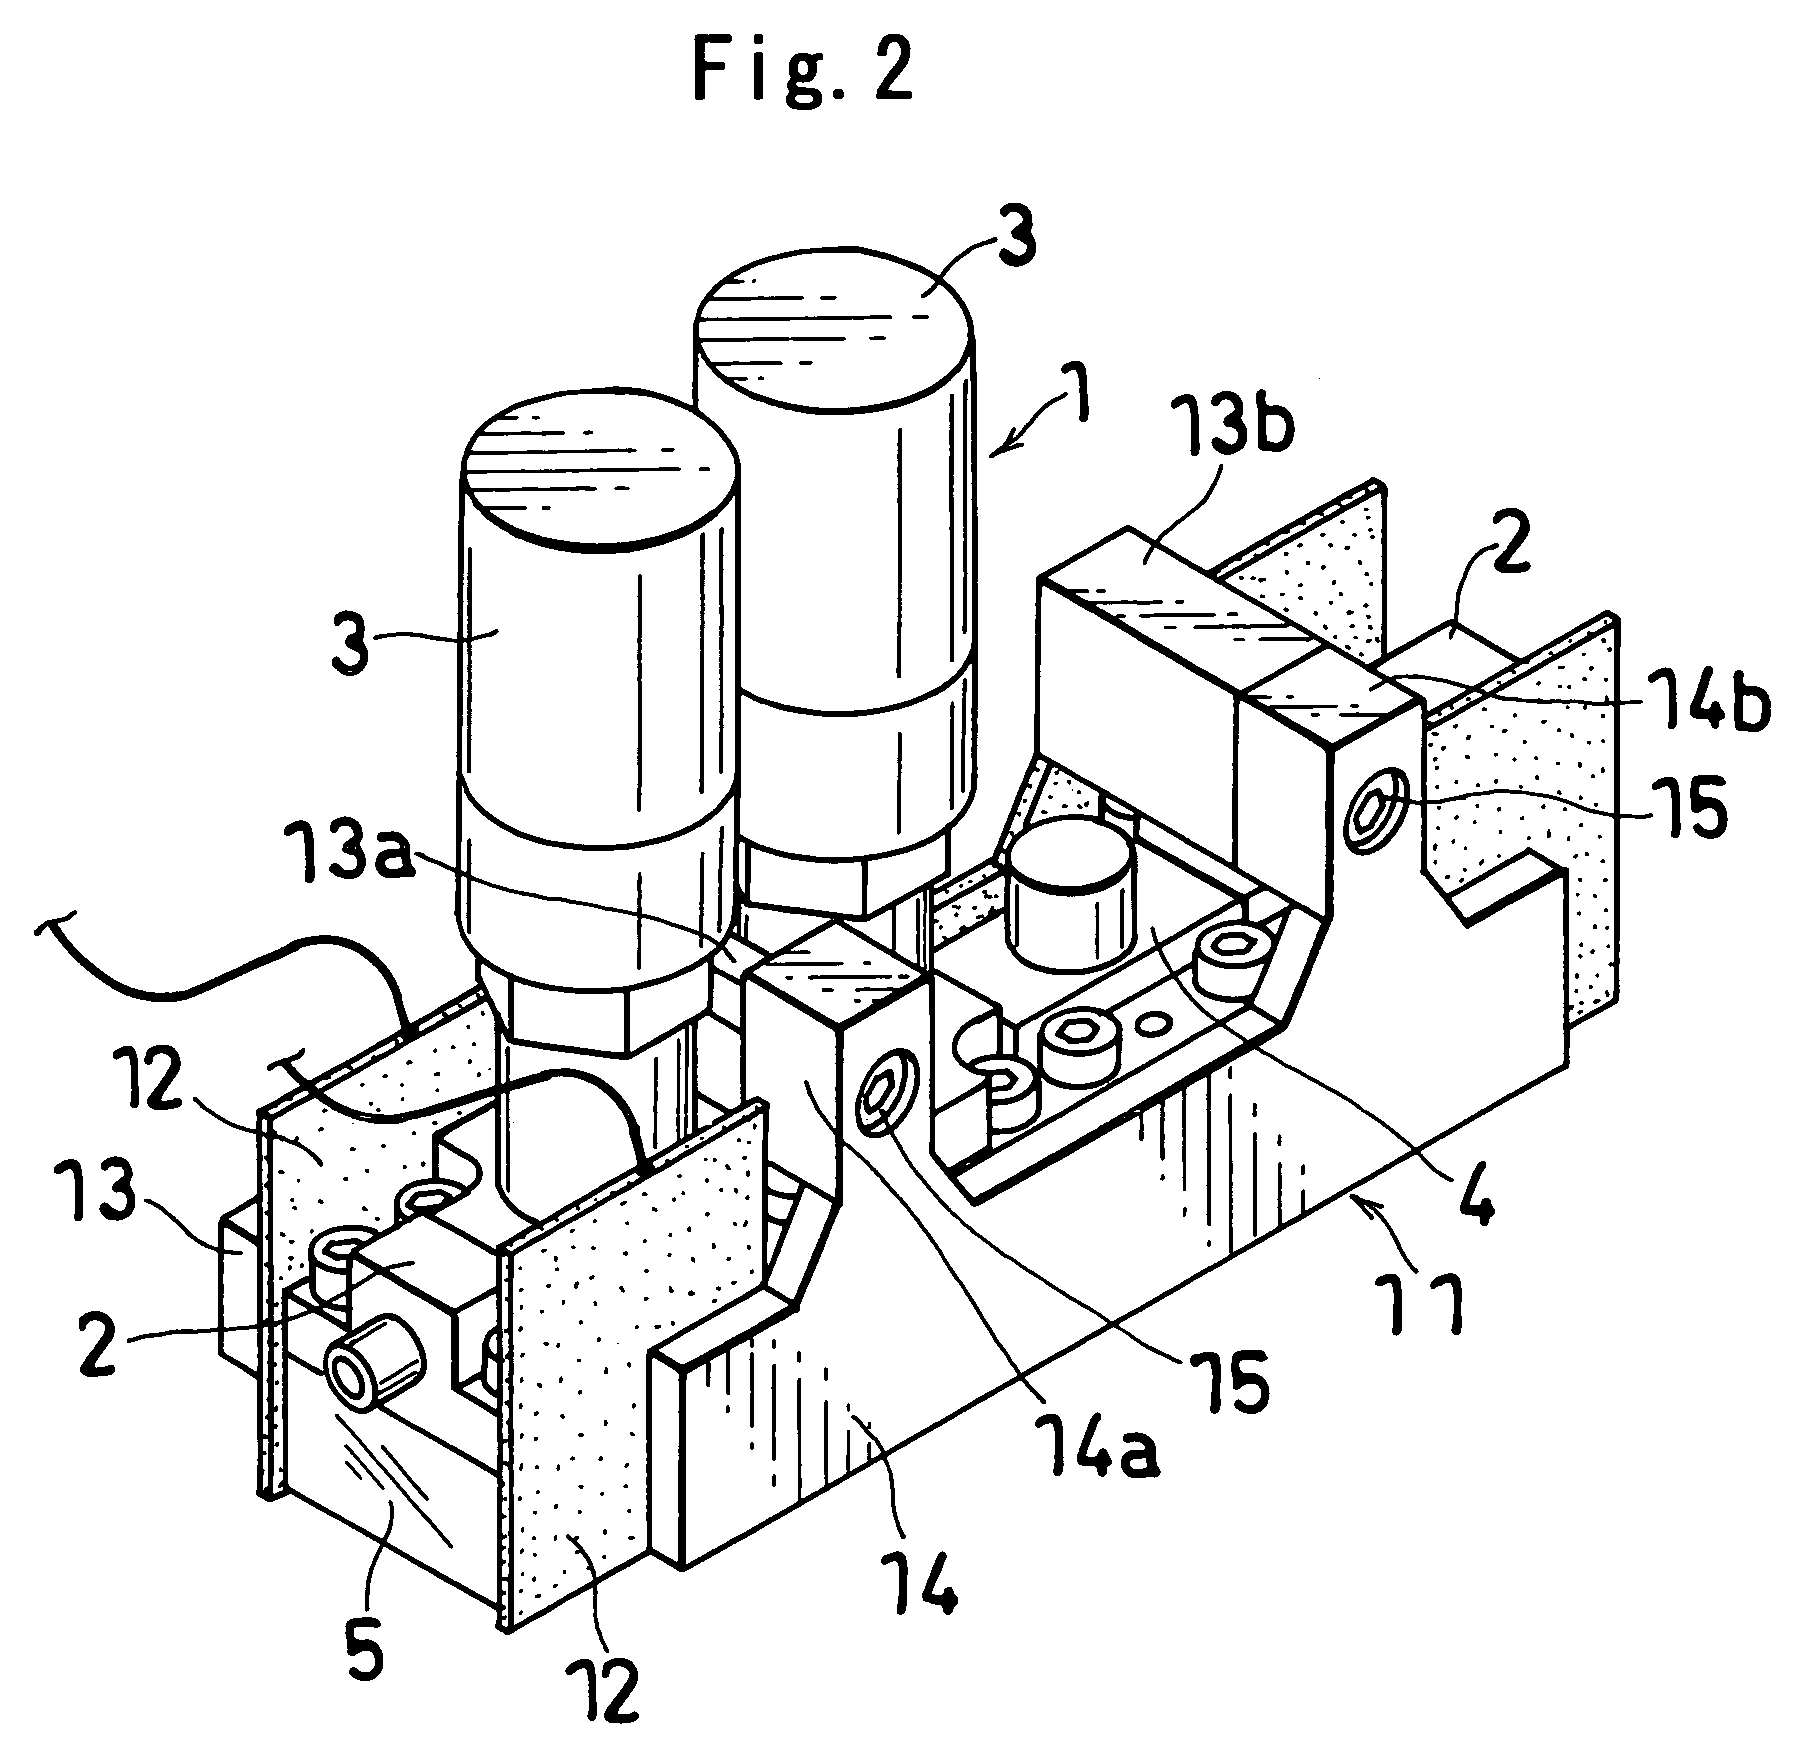 Fluid control apparatus with heating apparatus